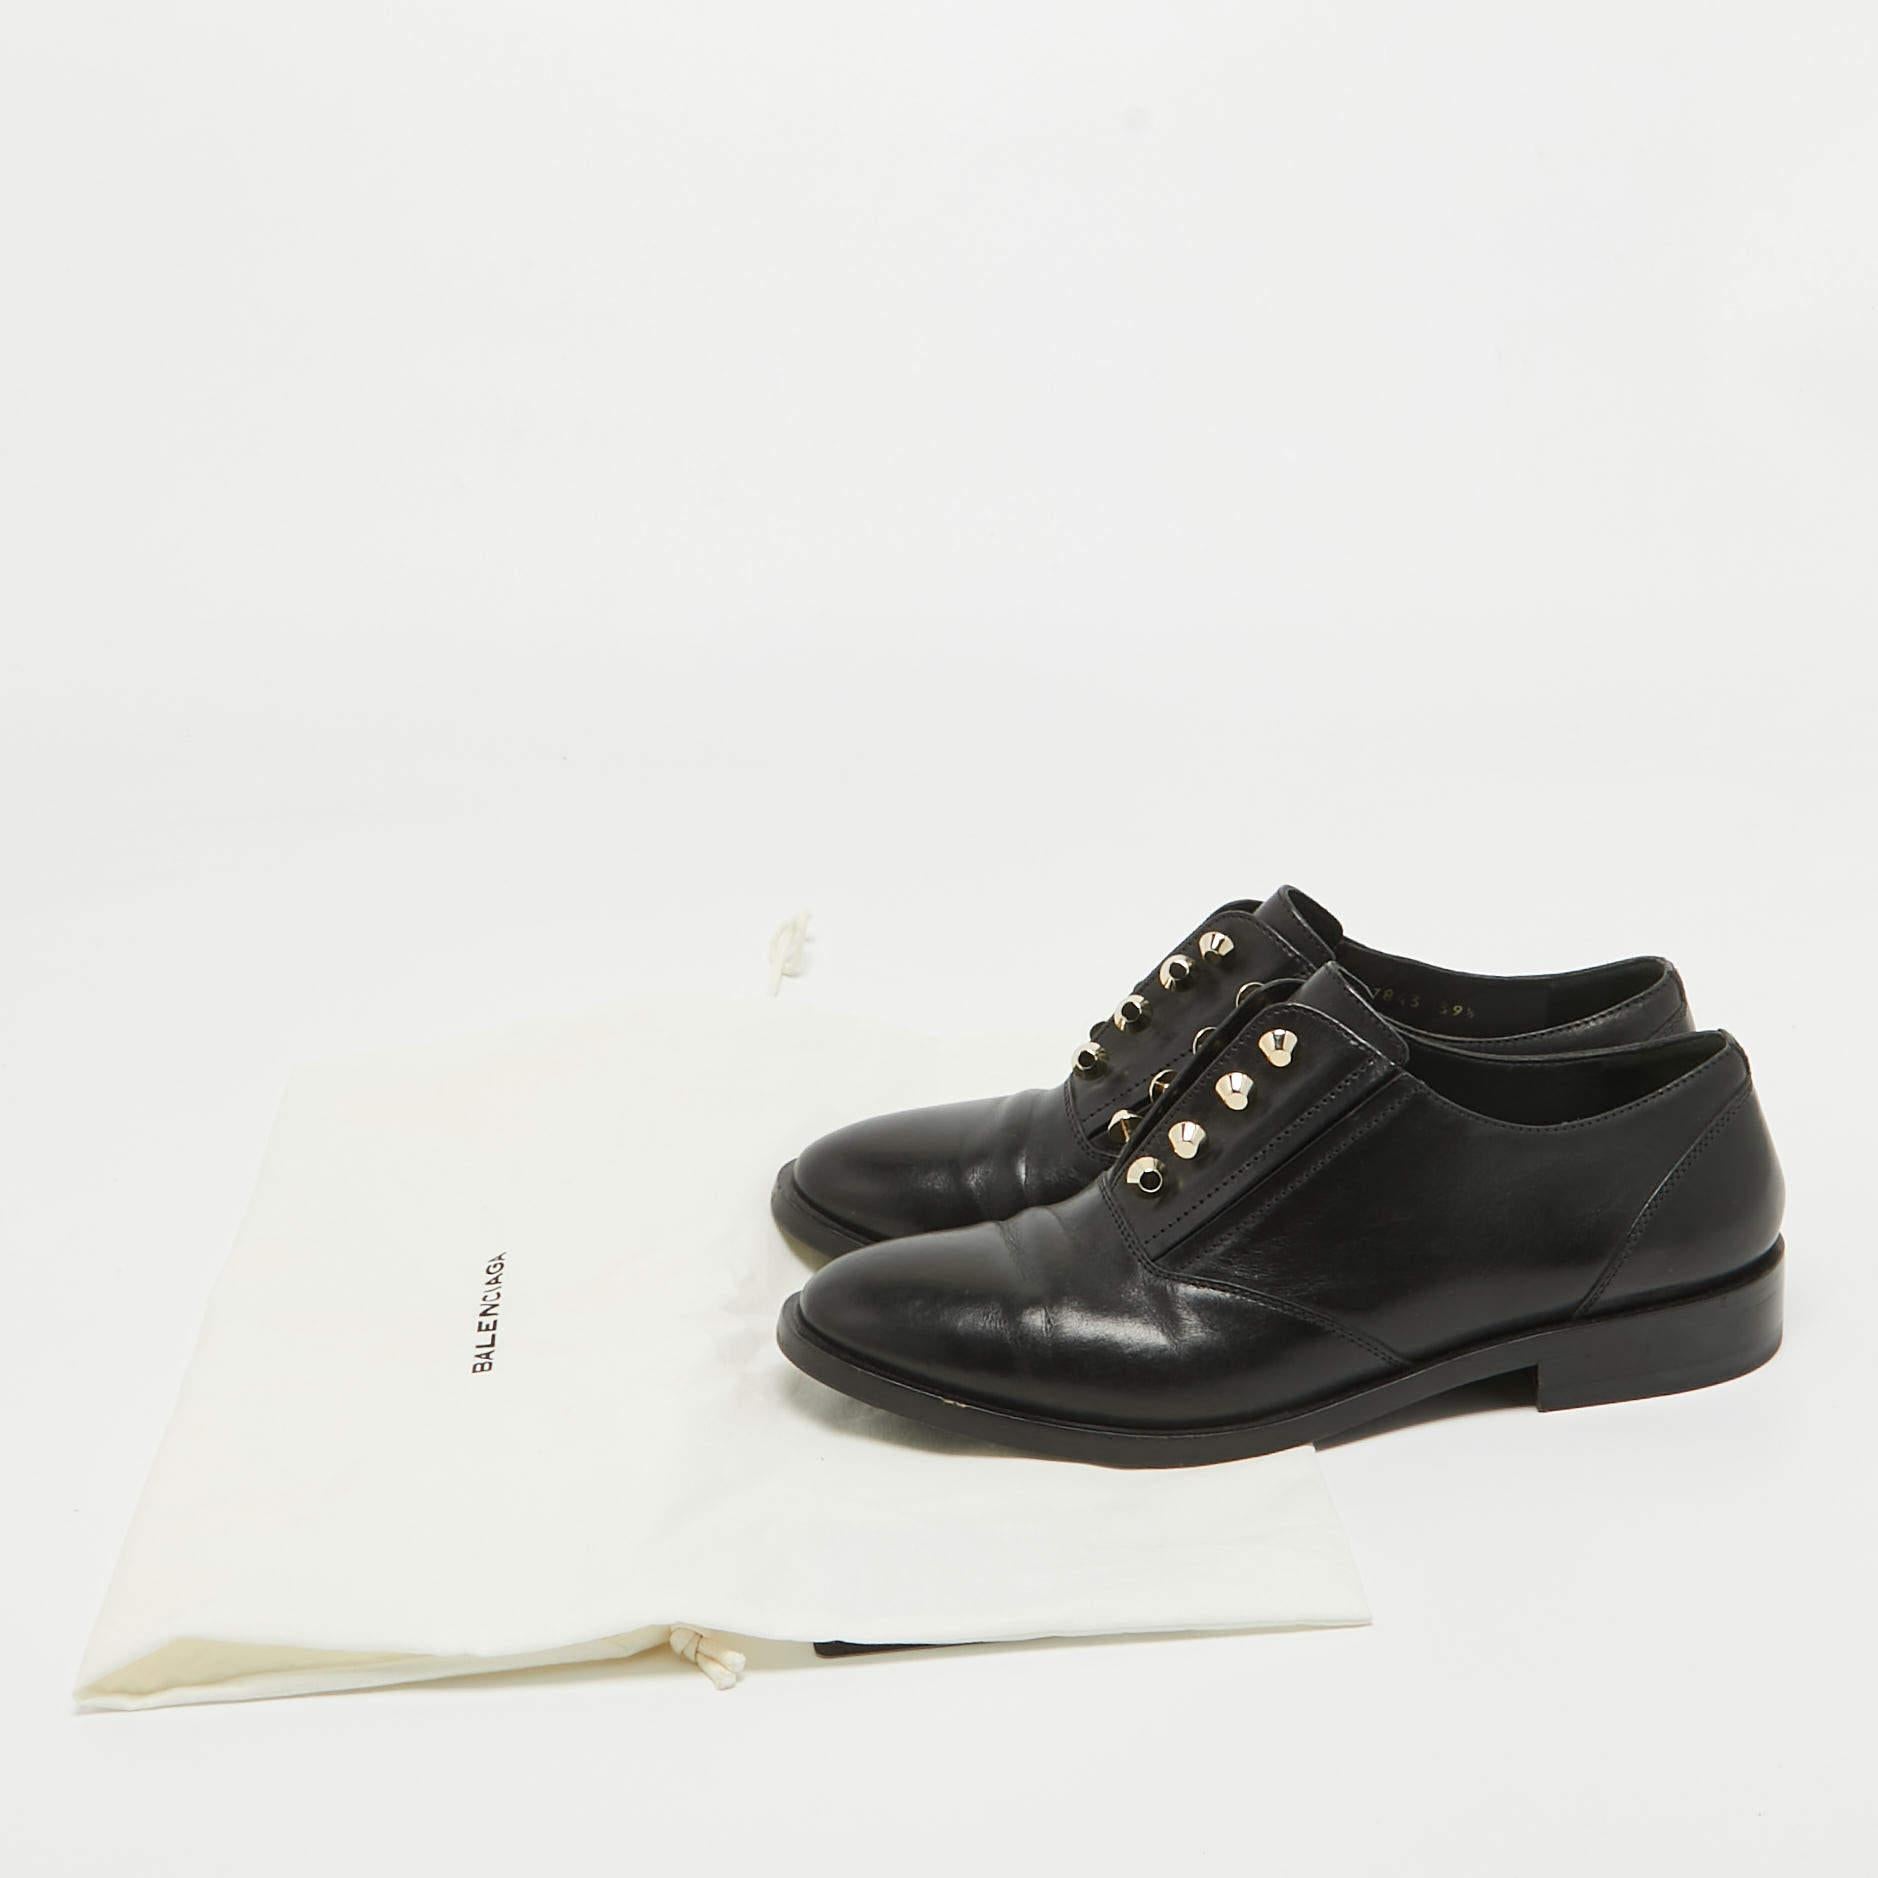 Balenciaga Black Leather Slip On Oxfords Size 39.5 For Sale 3